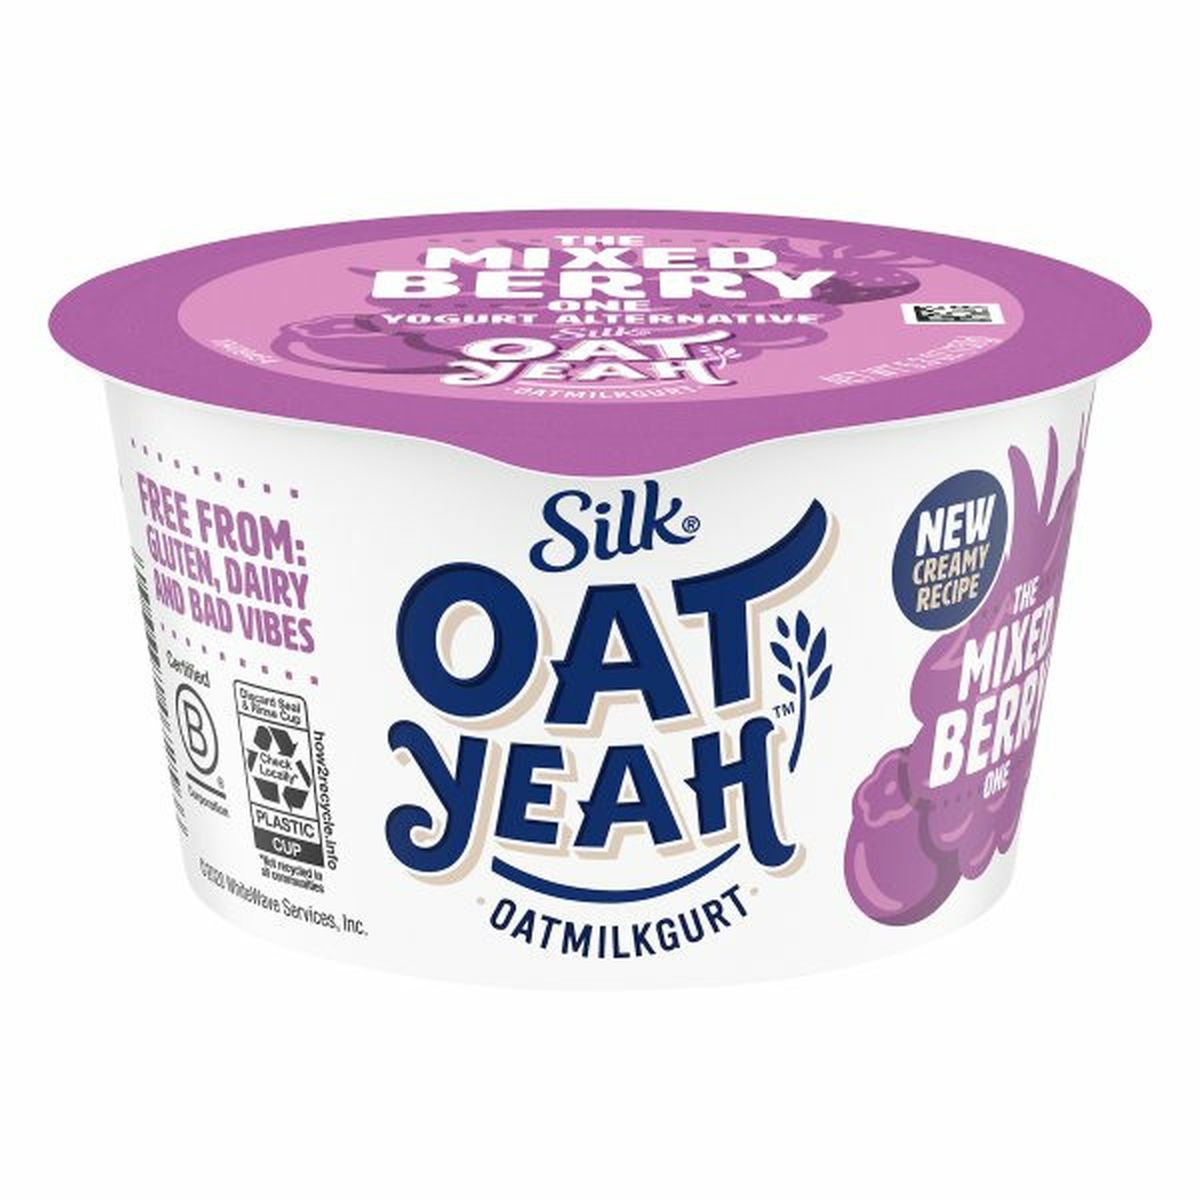 Calories in Silk Oat Yeah Oatmilkgurt, The Mixed Berry One